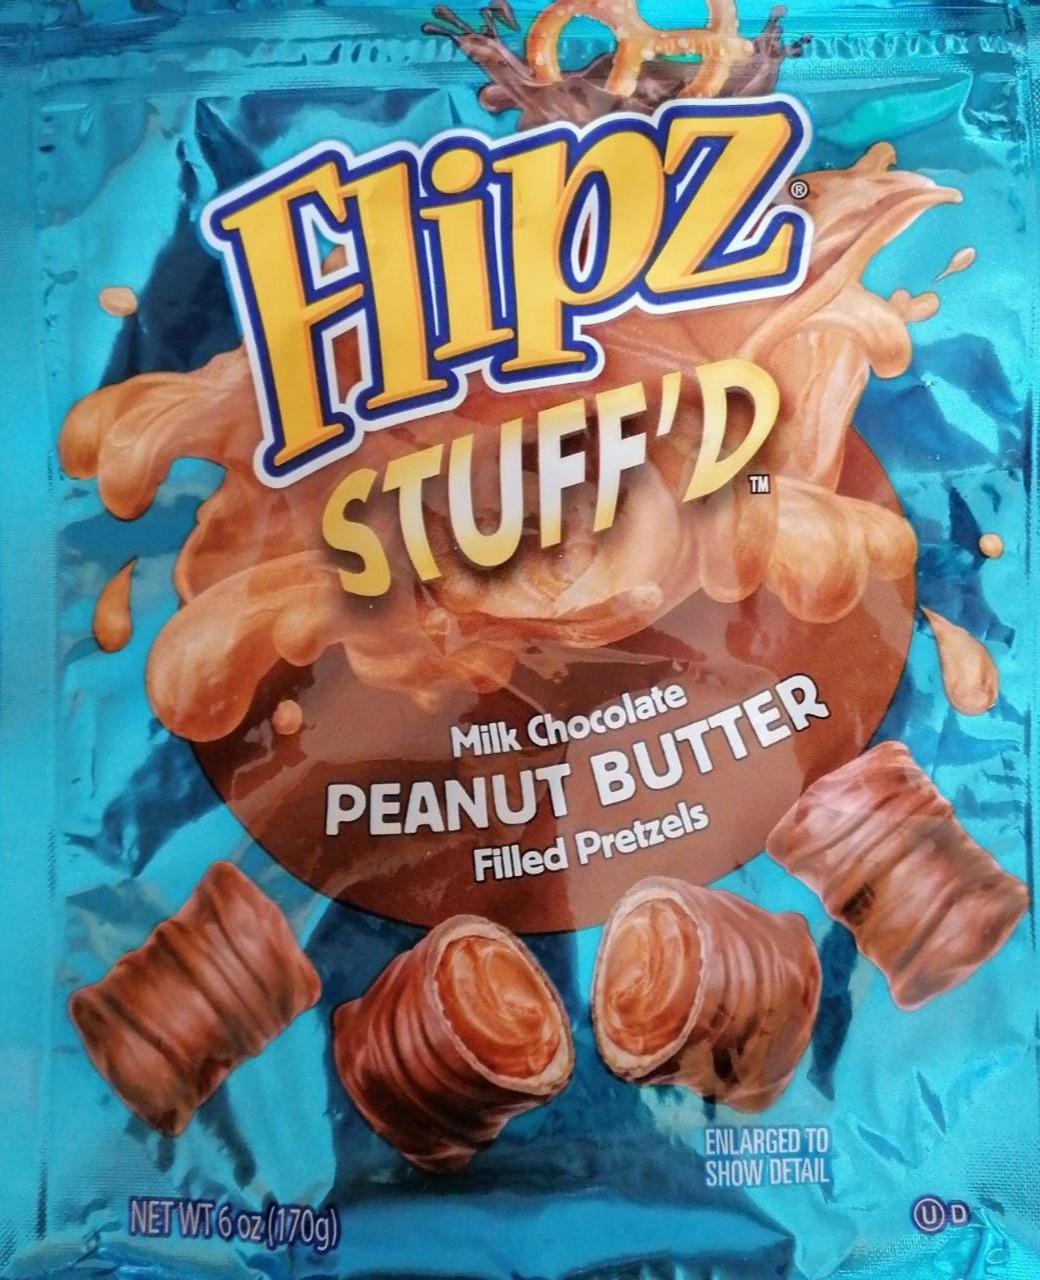 Fotografie - Milk chocolate peanut butter filled pretzels Flipz Stuff'd